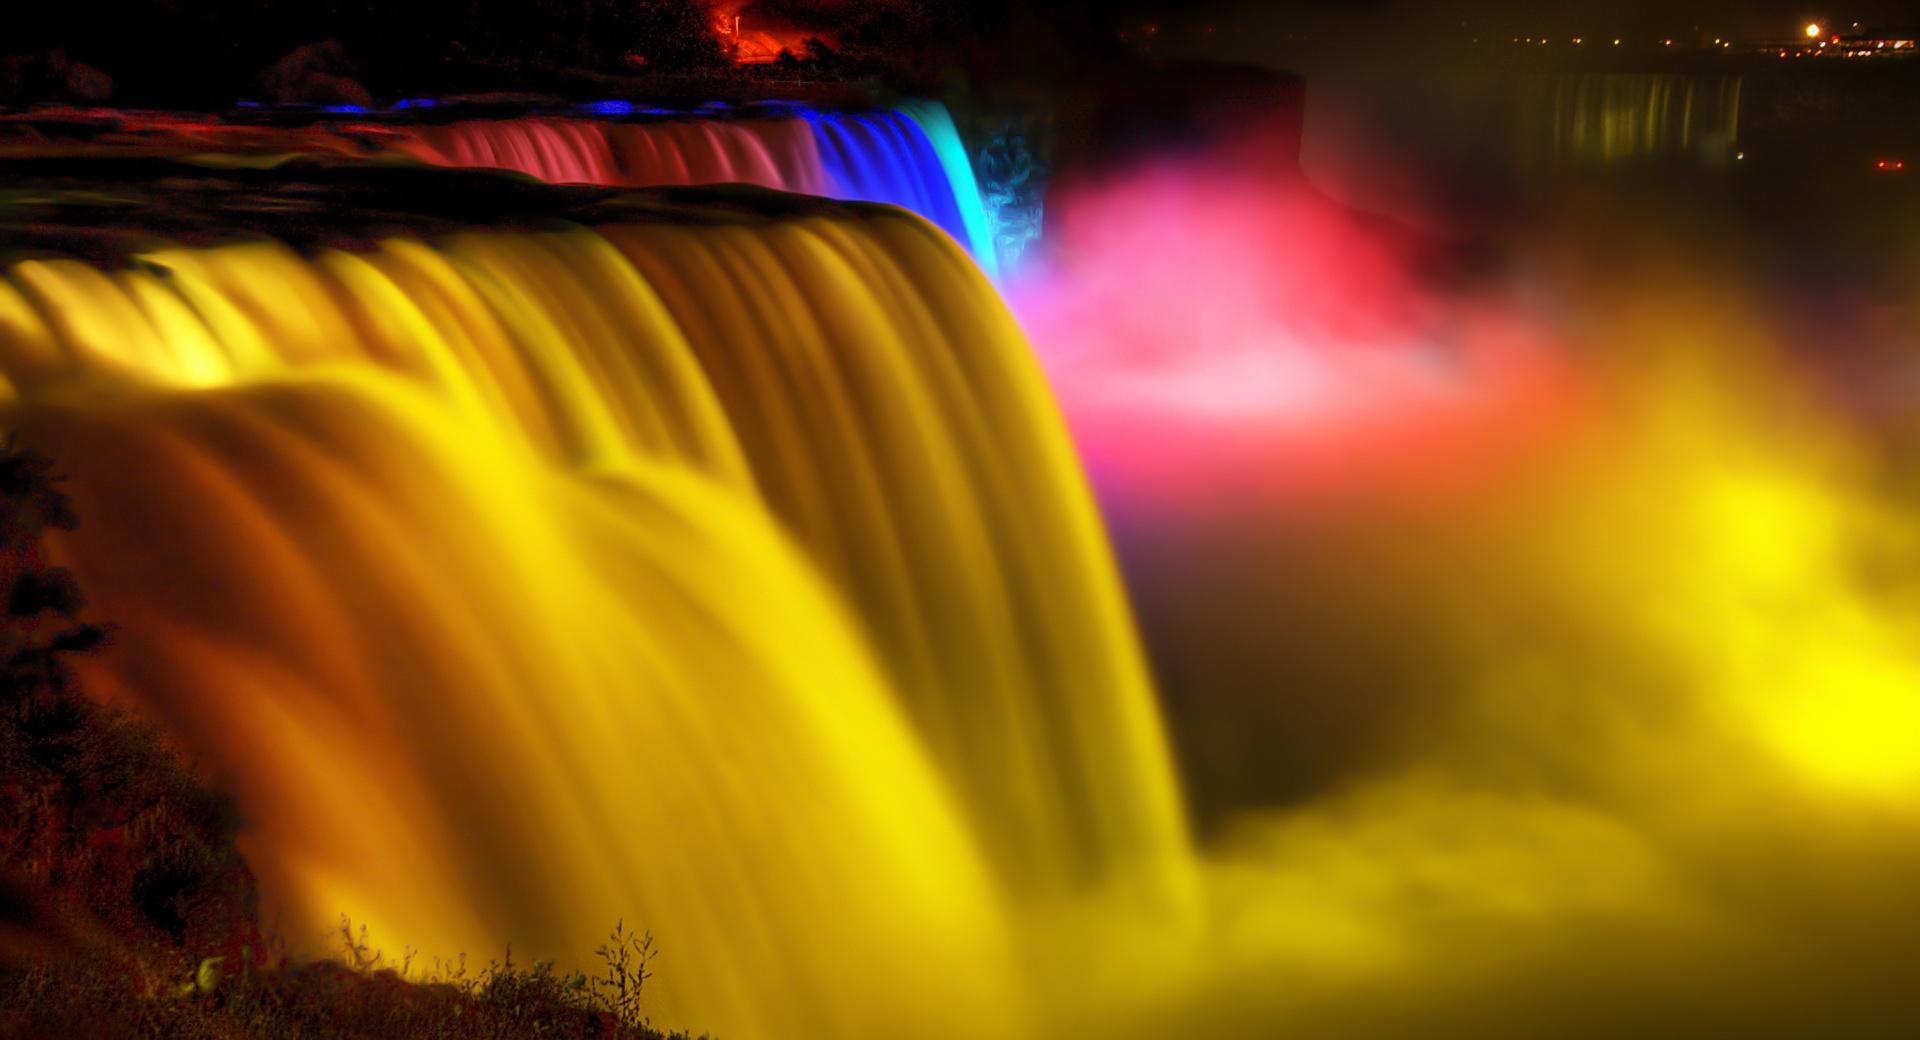 Niagara Falls Night View at 1280 x 960 size wallpapers HD quality